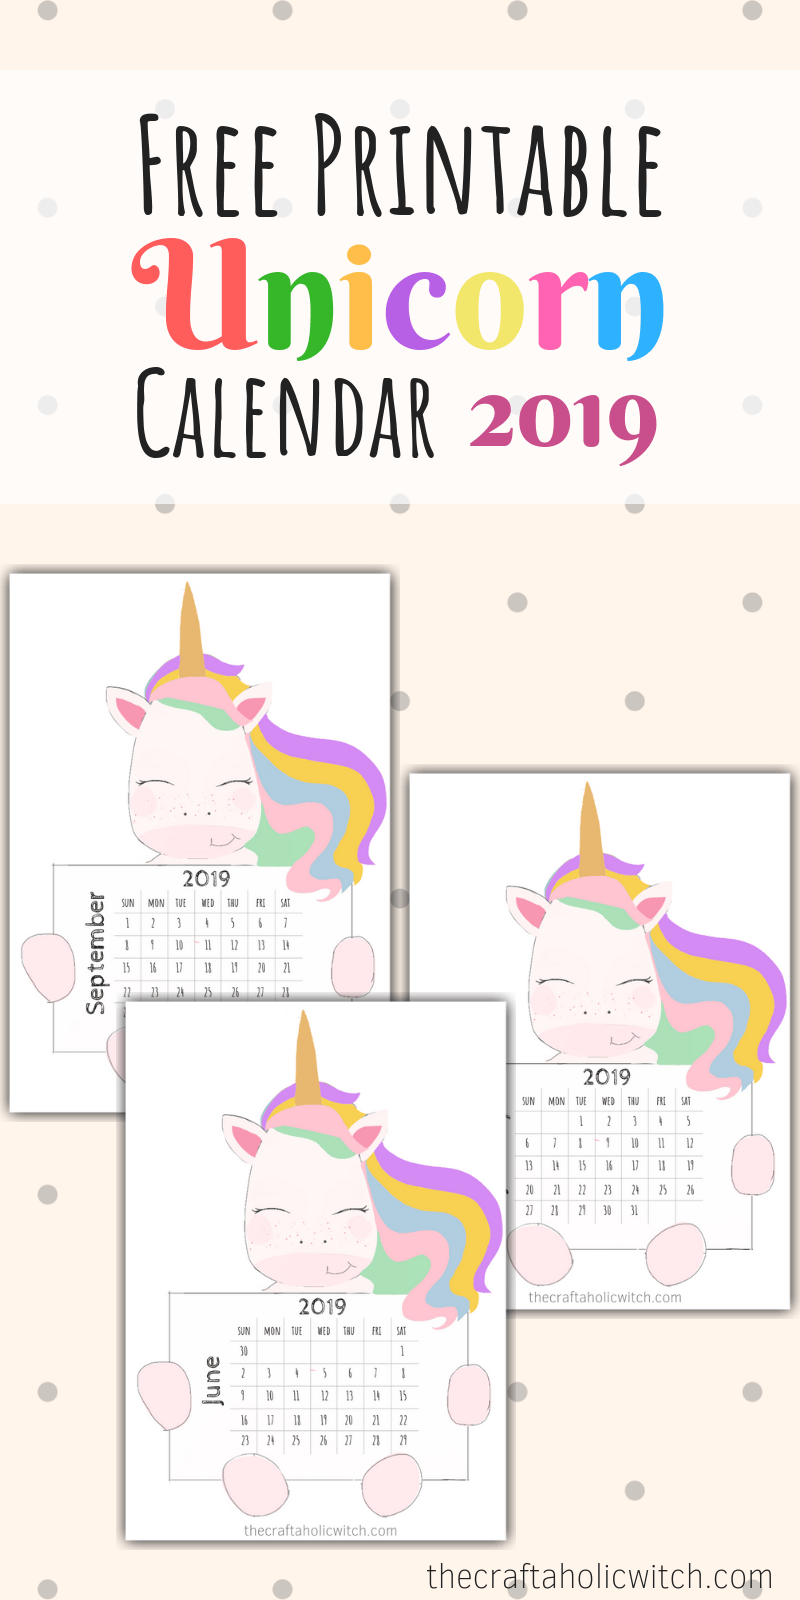 klendr pinti - Free Printable Unicorn Calendar 2019